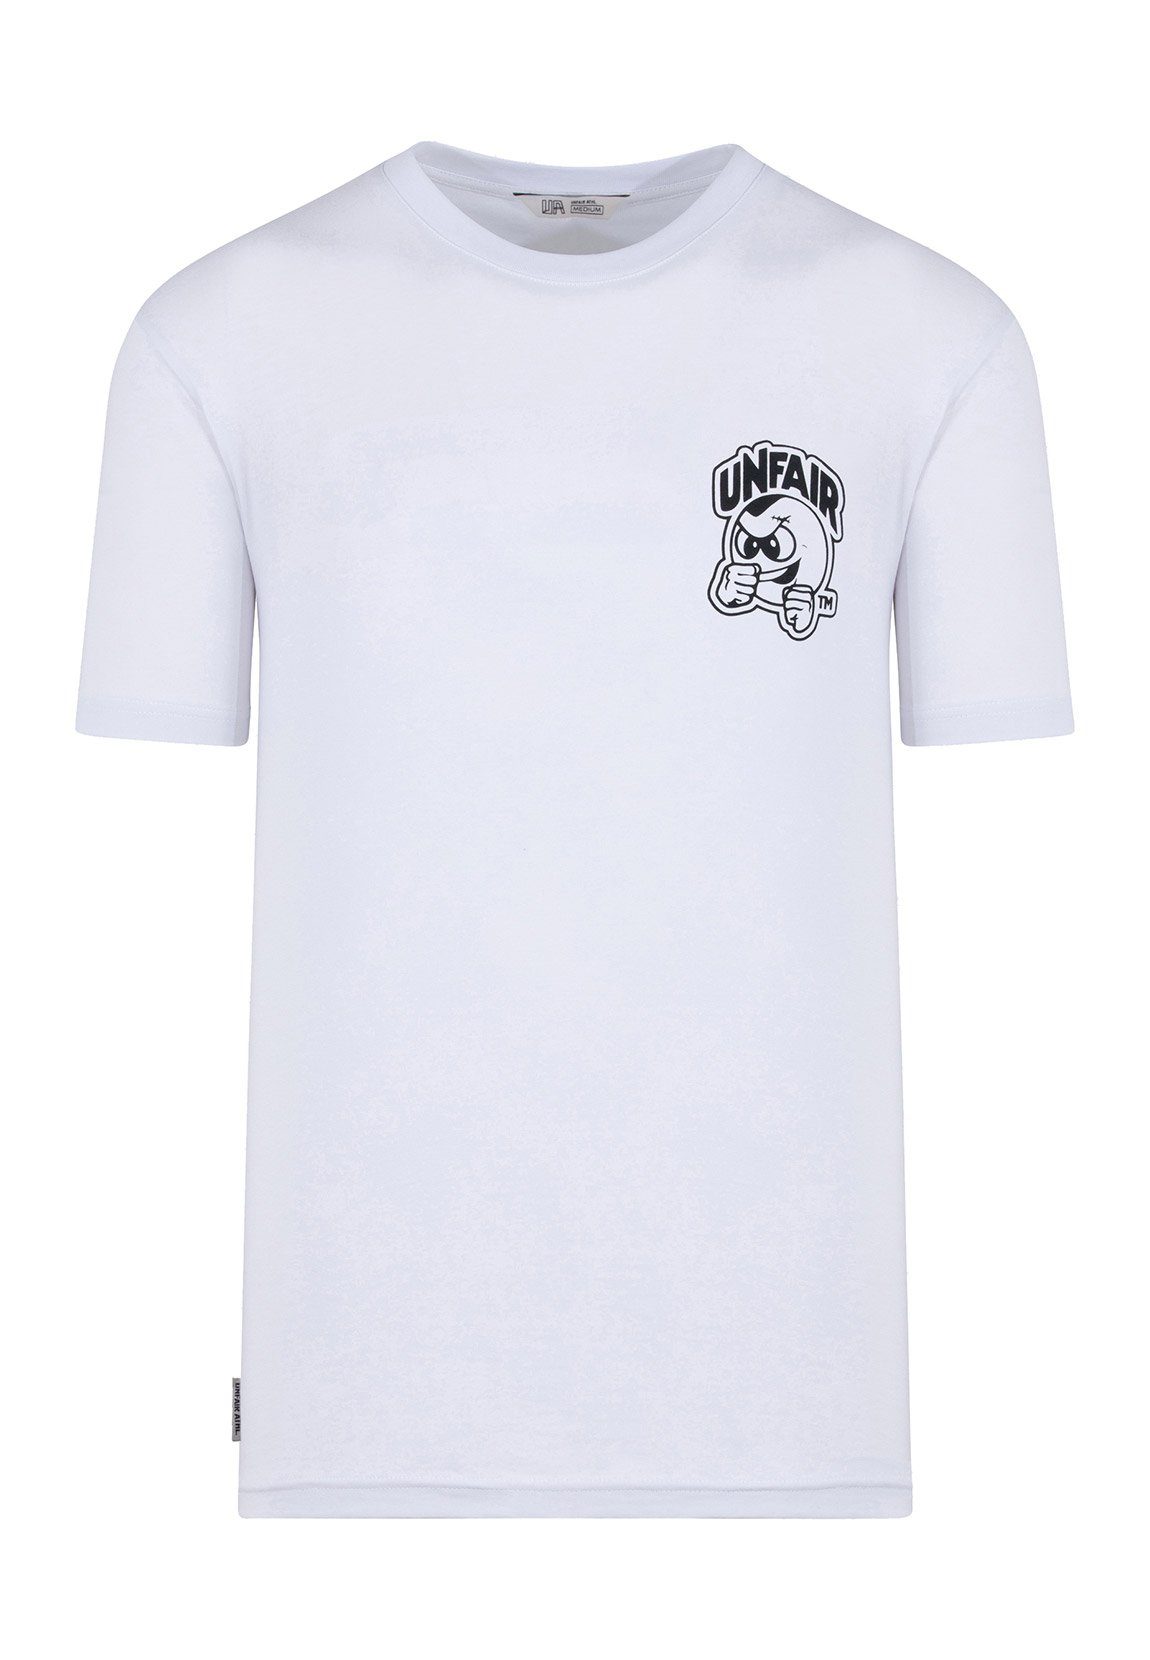 Unfair Athletics T-Shirt Unfair Athletics Herren T-Shirt PUNCHINGBALL UNFR18-012 White Weiß